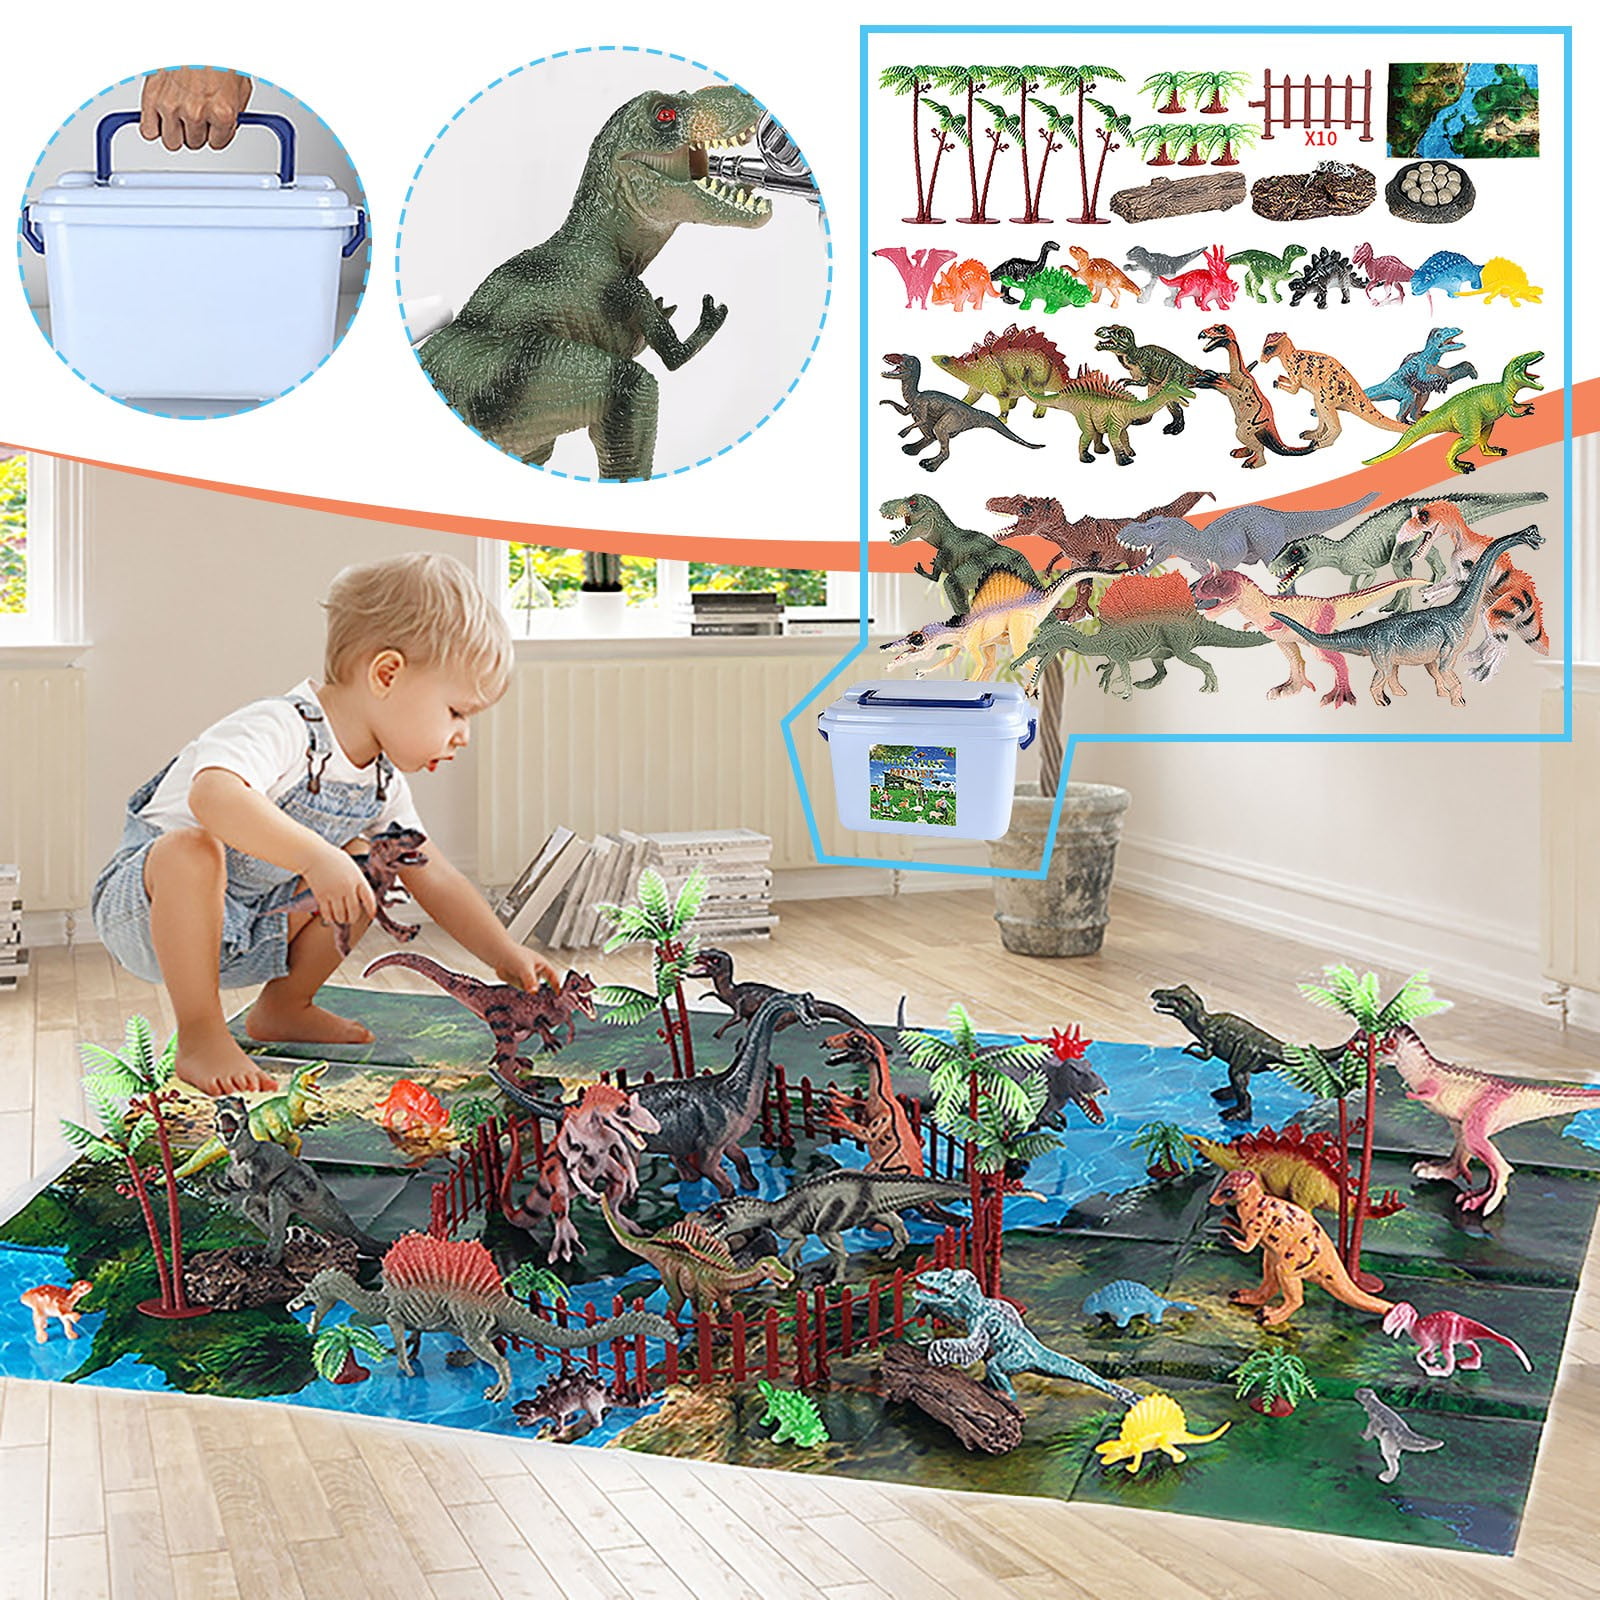 44/52x New Dinosaur Set Playset Animal Figures of Wild Dinosaur Animals Kids Toy 